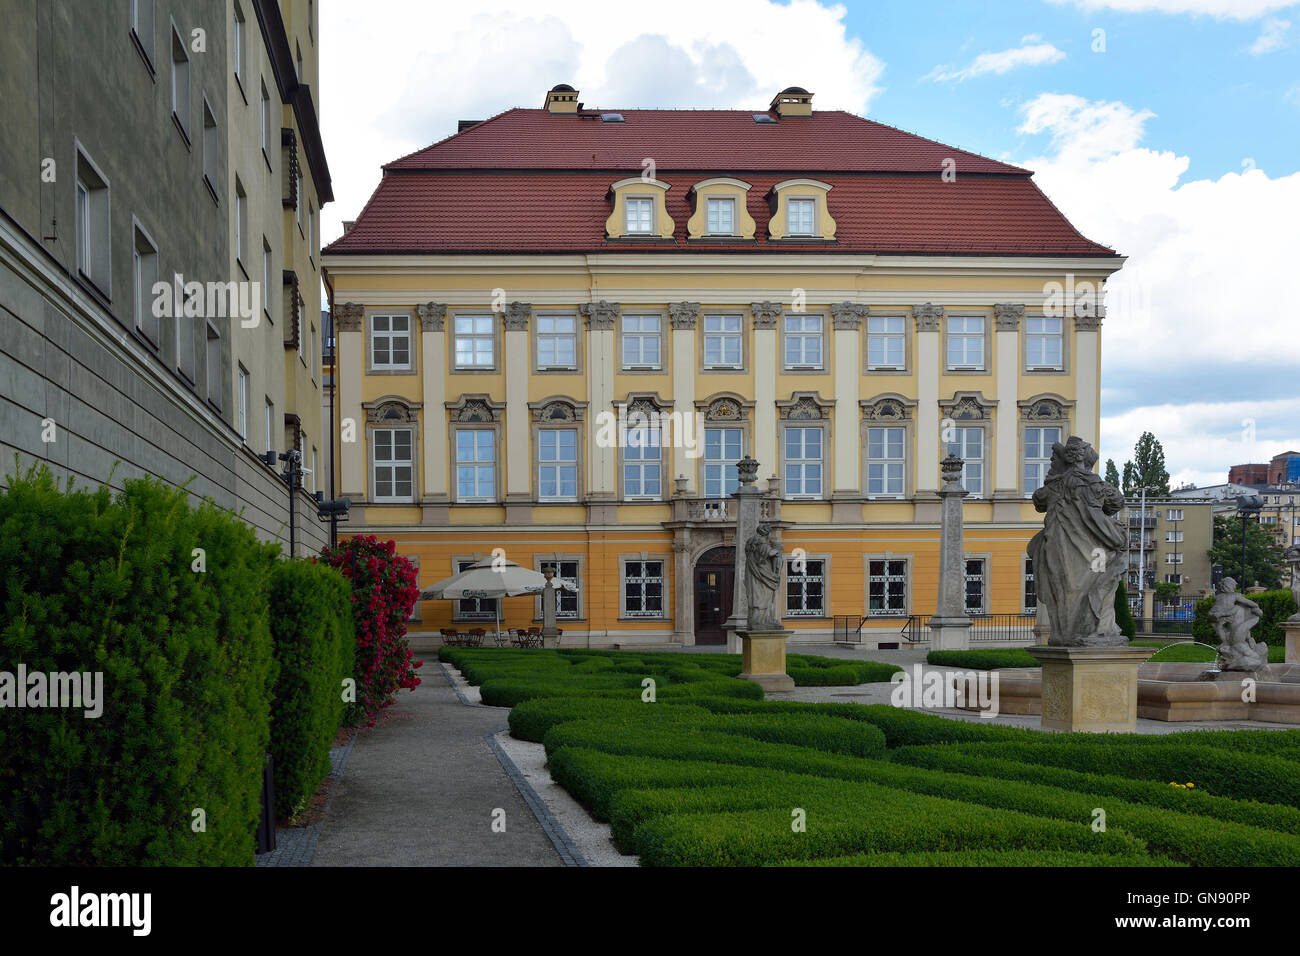 Royal Palace von Wroclaw in Polen - Palac Krolewski. Stockfoto